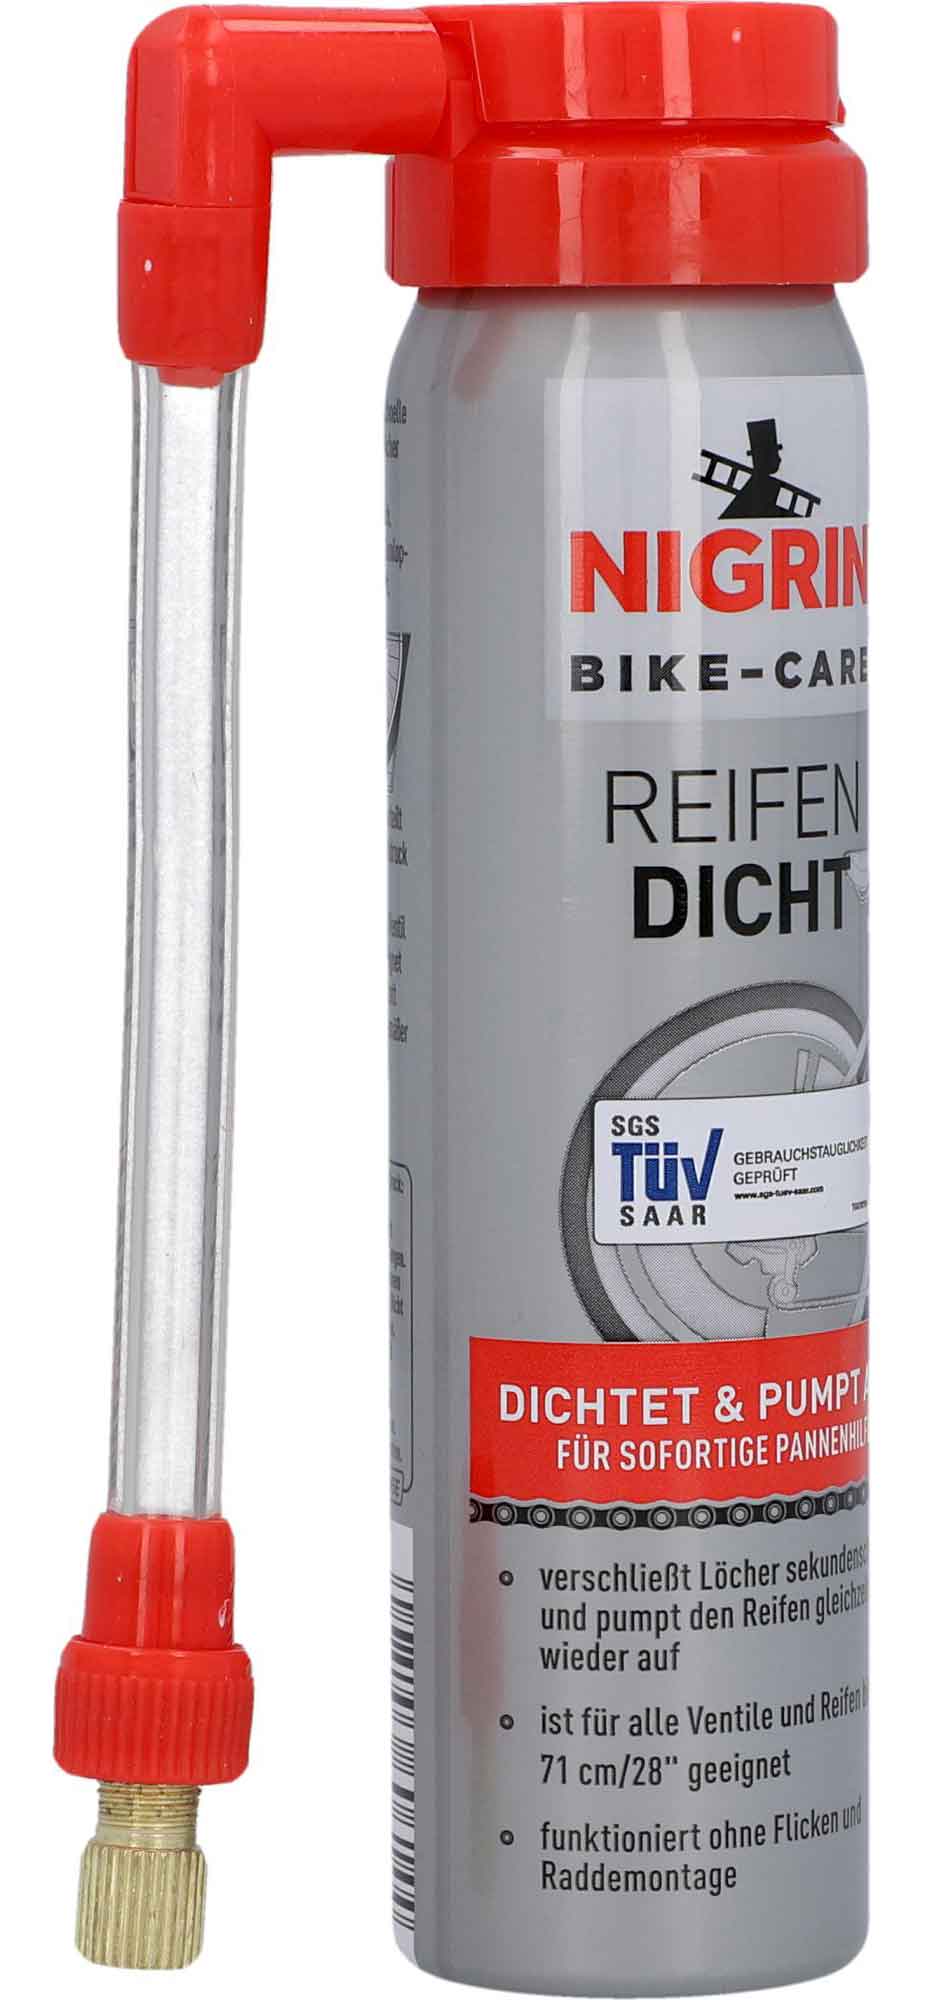 Nigrin BIKE-CARE Reifen-Dicht 75ml 60614